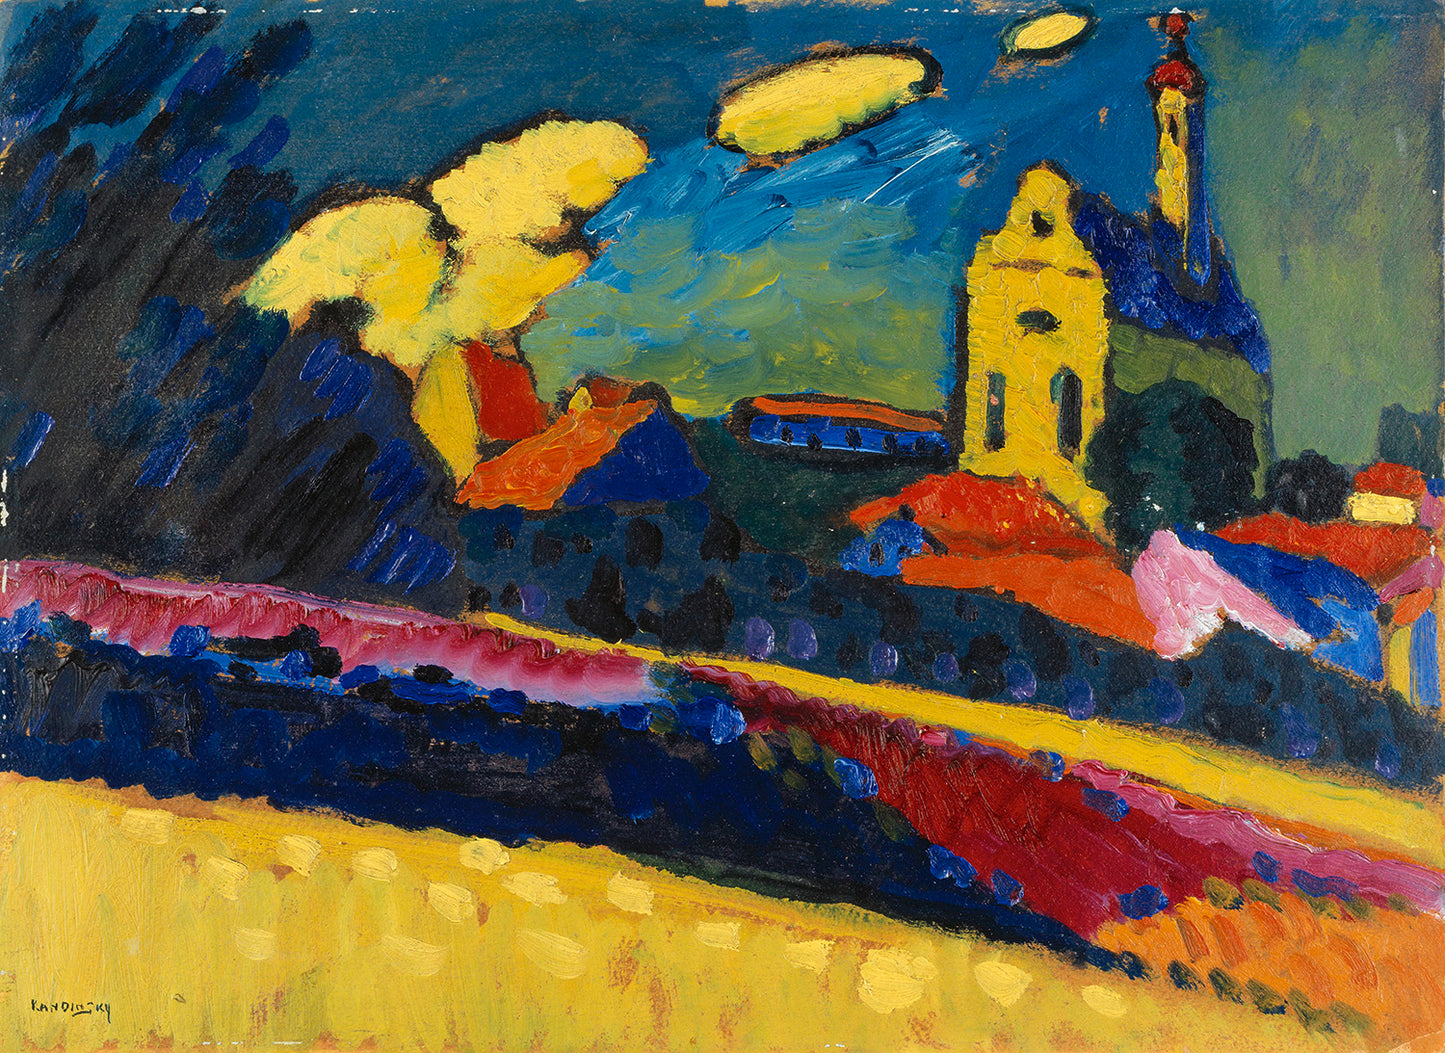 Study of Murnau - Landscape with Church by Wassily Kandinsky